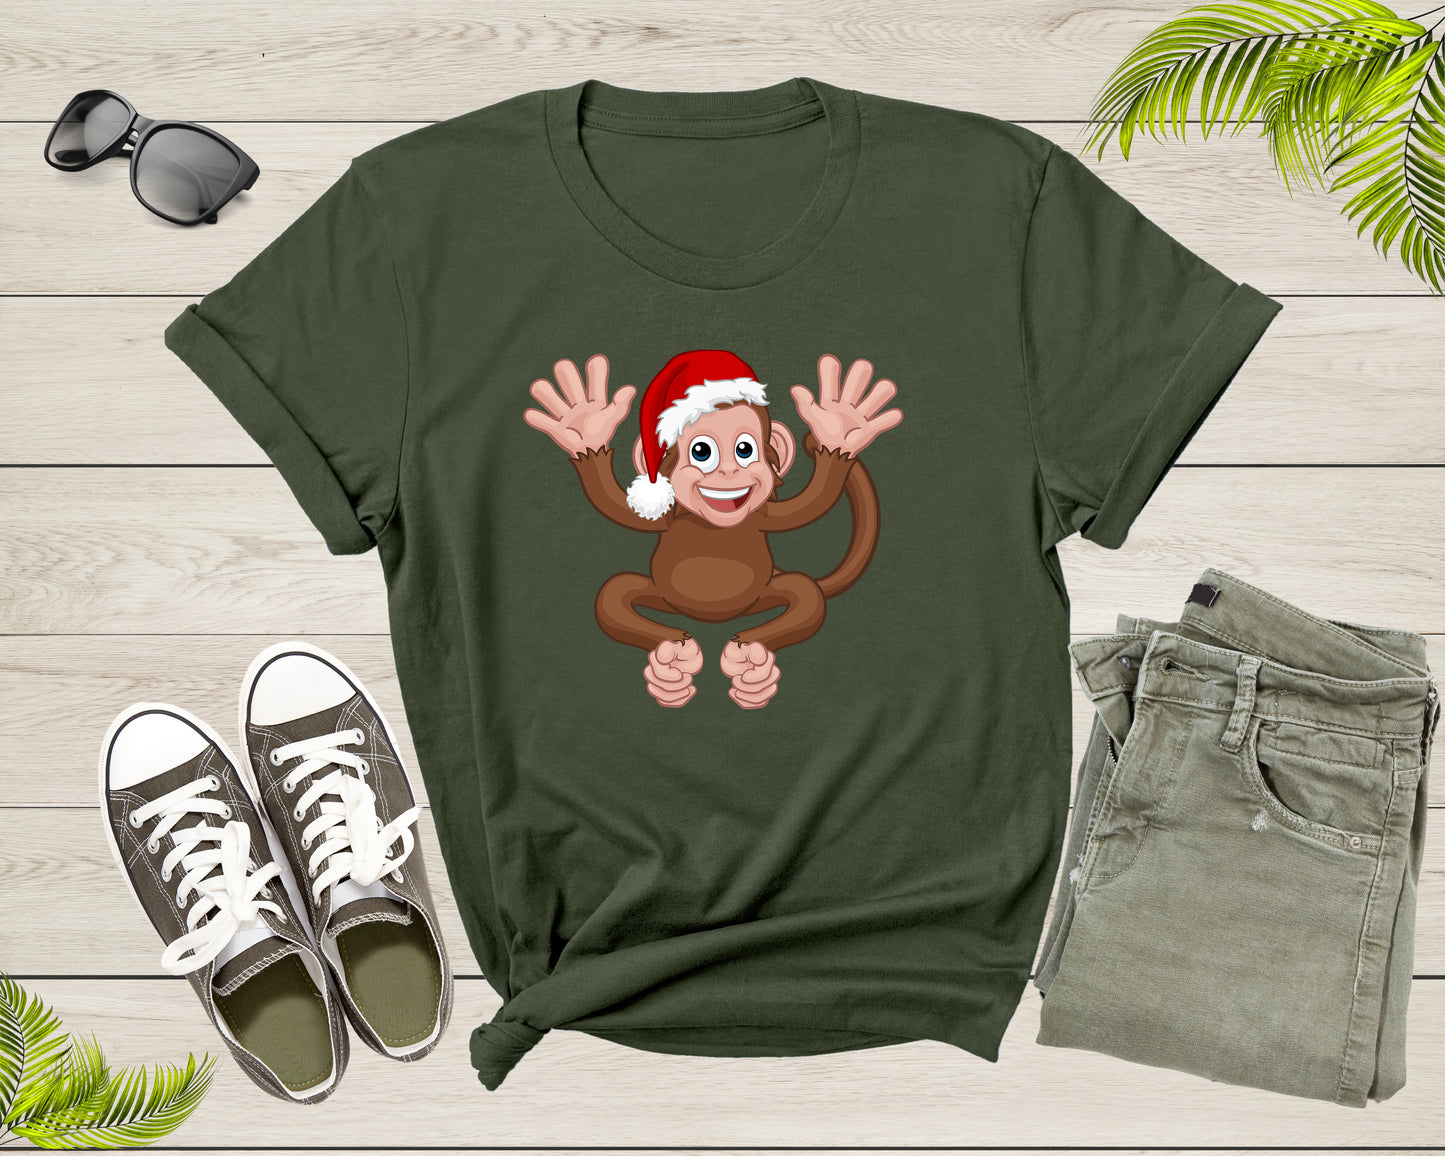 Fun Monkey Wearing Xmas Hat Cute Animal Cartoon Character T-Shirt Monkey Lover Gift T Shirt for Men Women Kids Boys Girls Graphic Tshirt